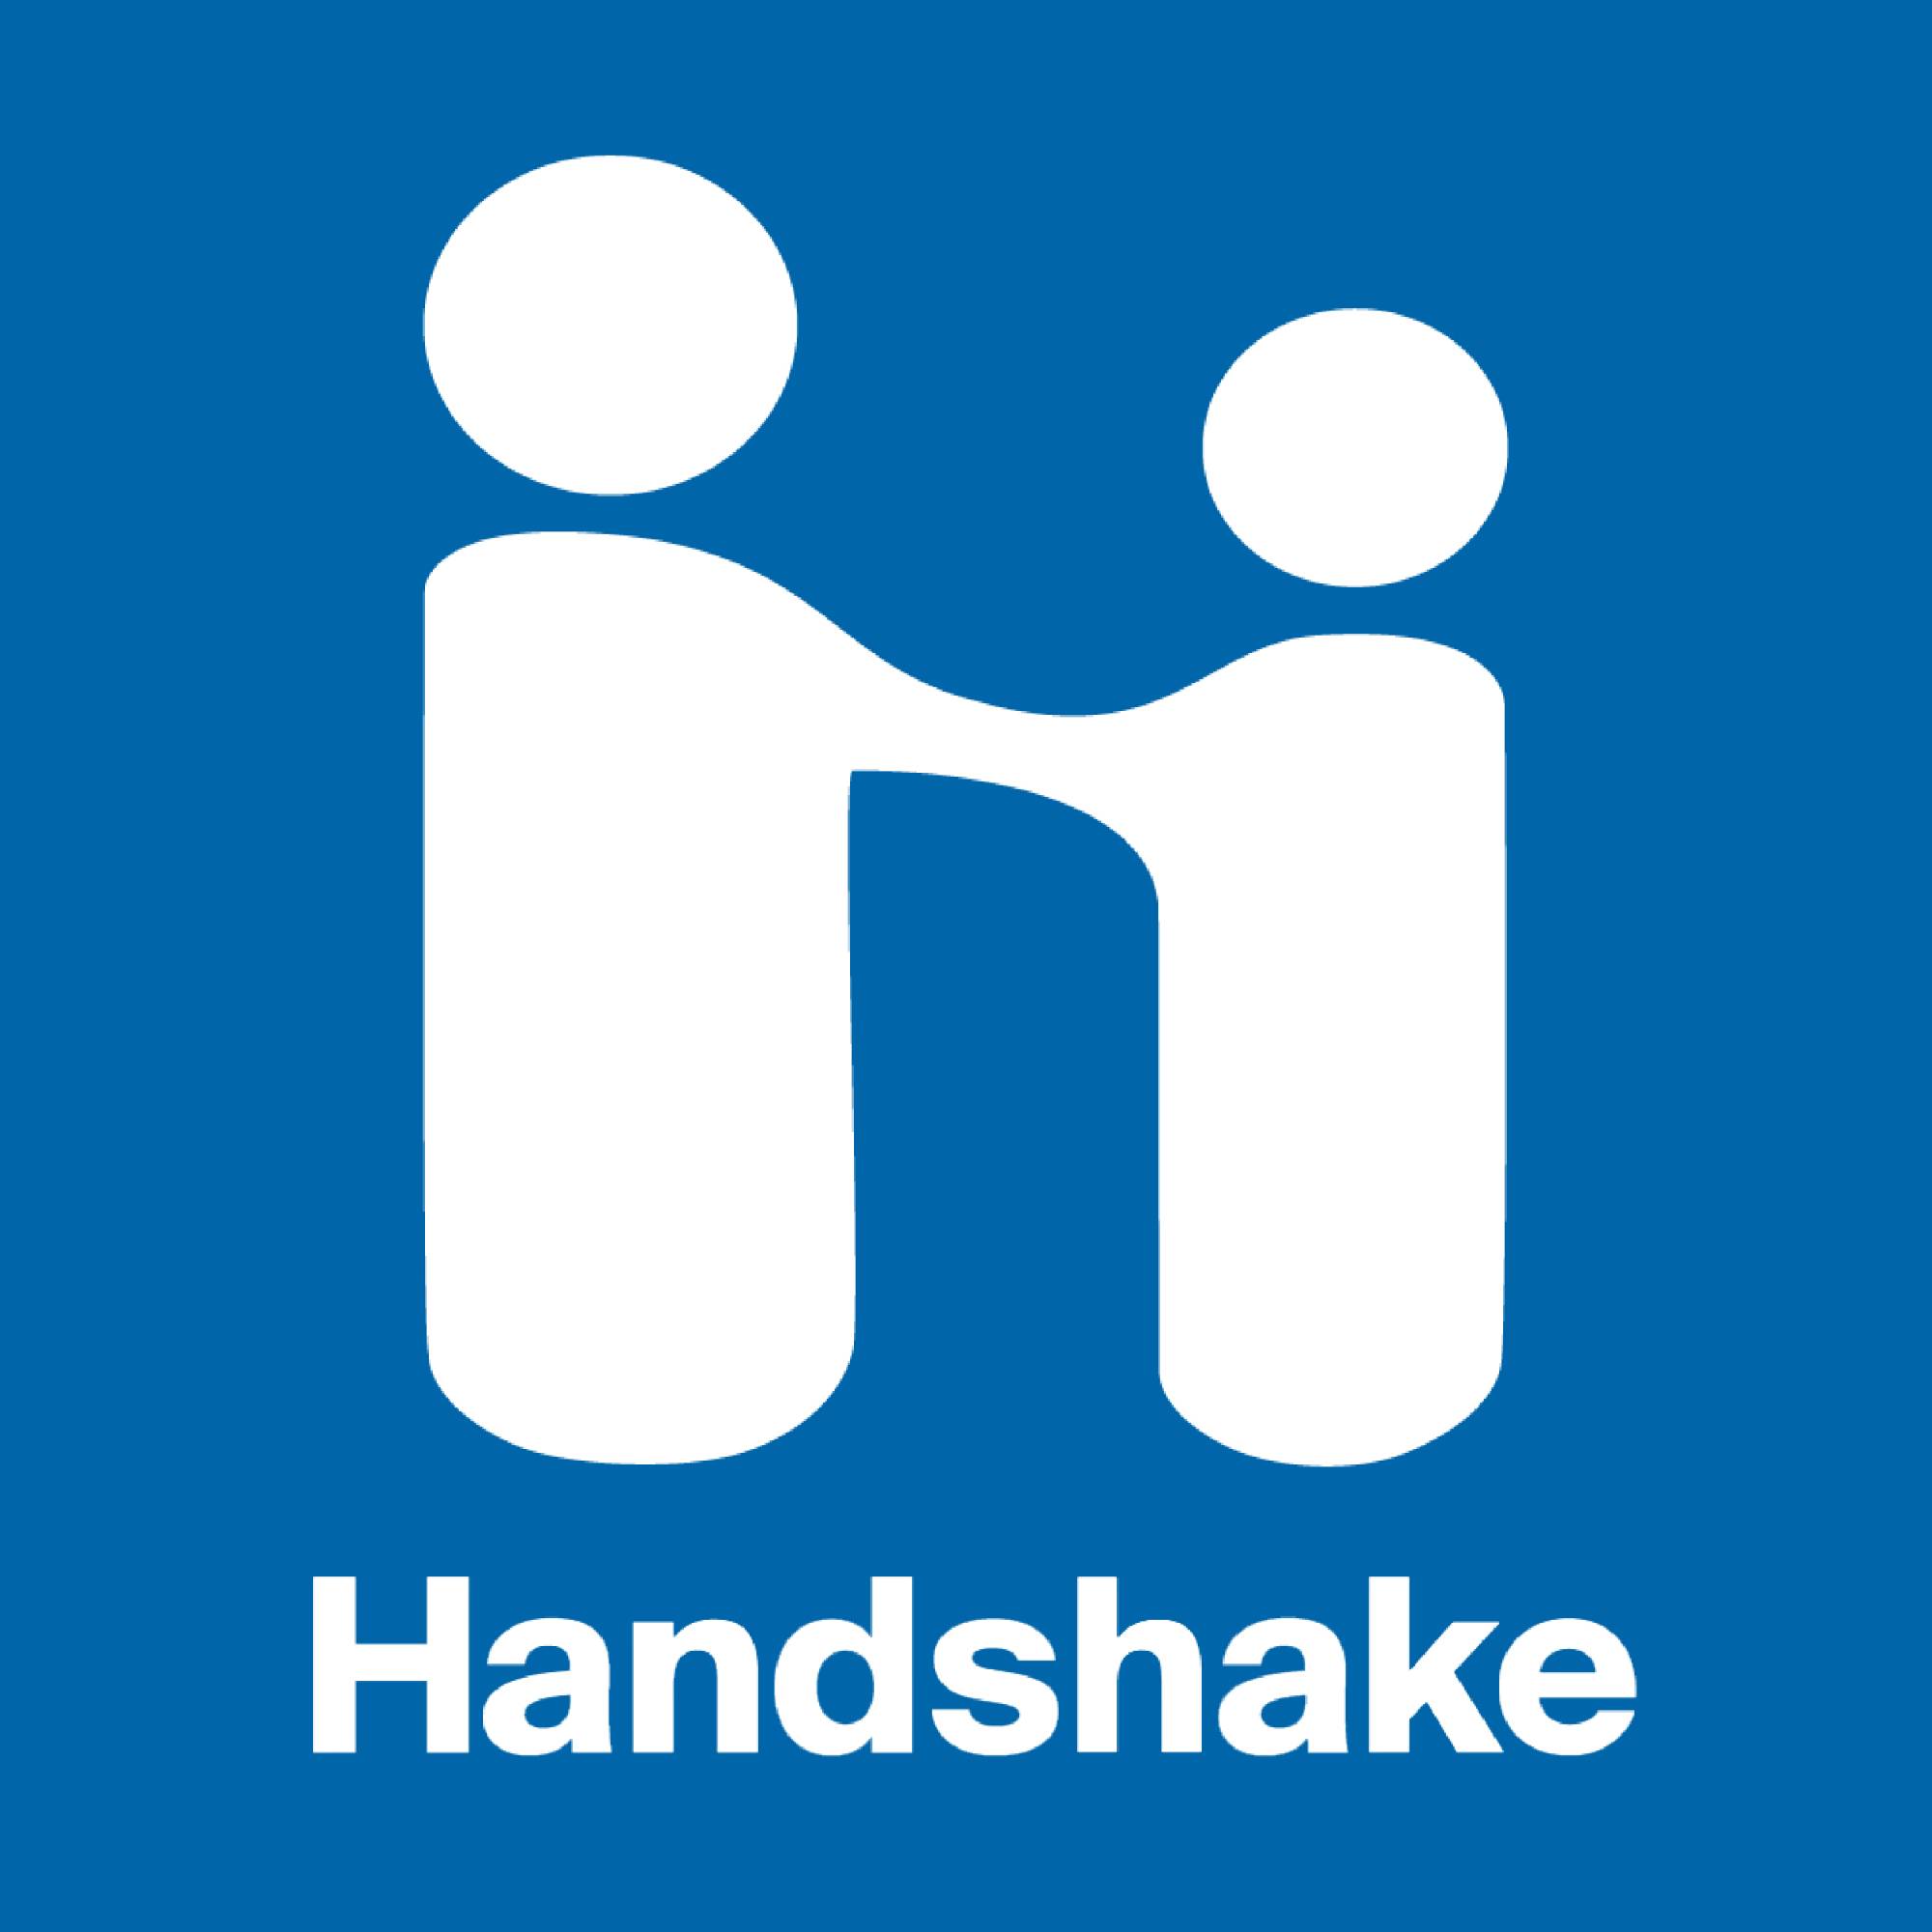 Handshake logo on a blue background